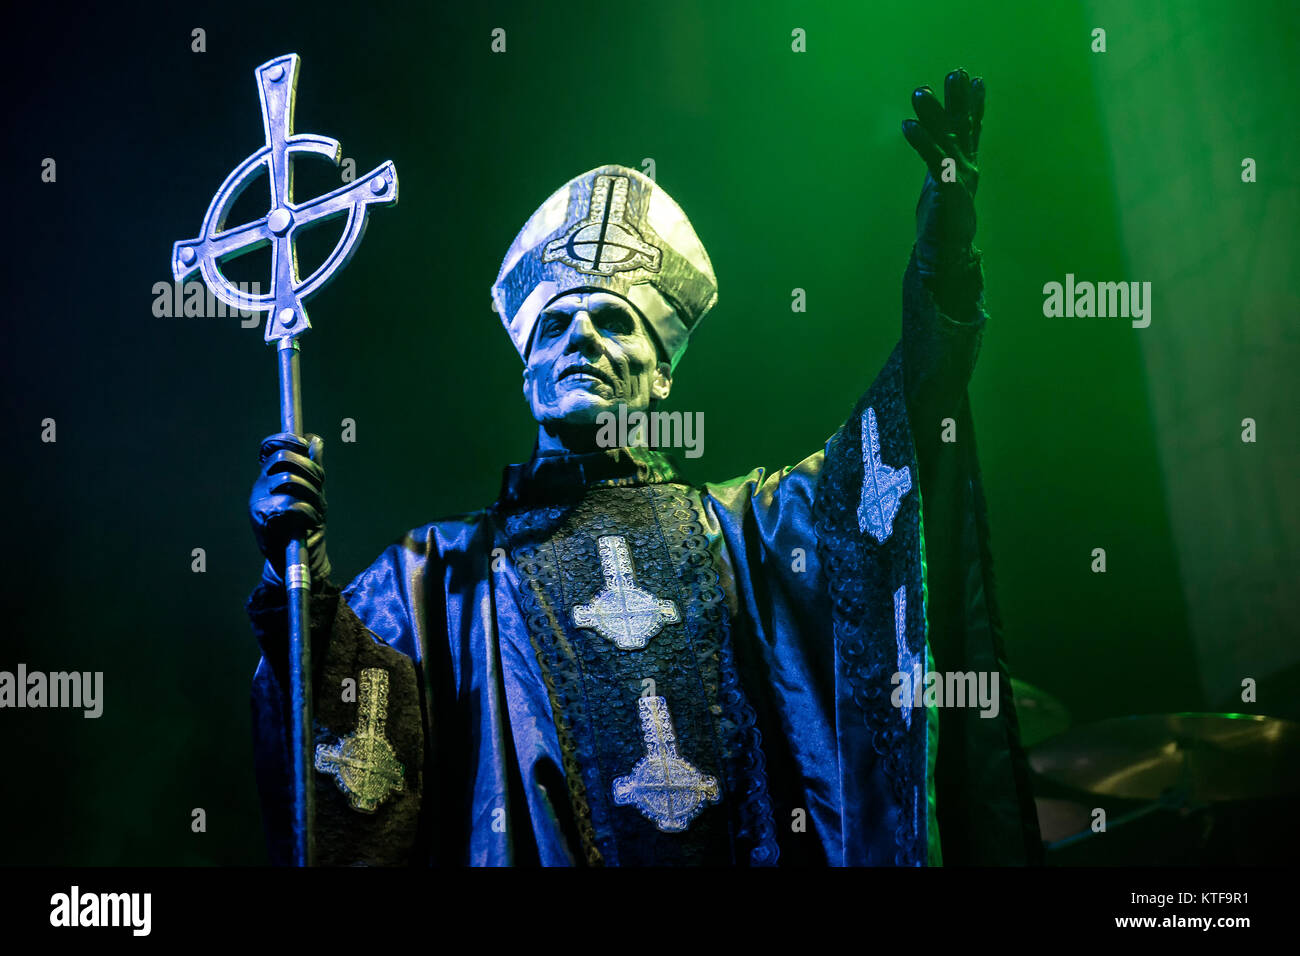 Swedish metal band Ghost headlines Peoria rock show